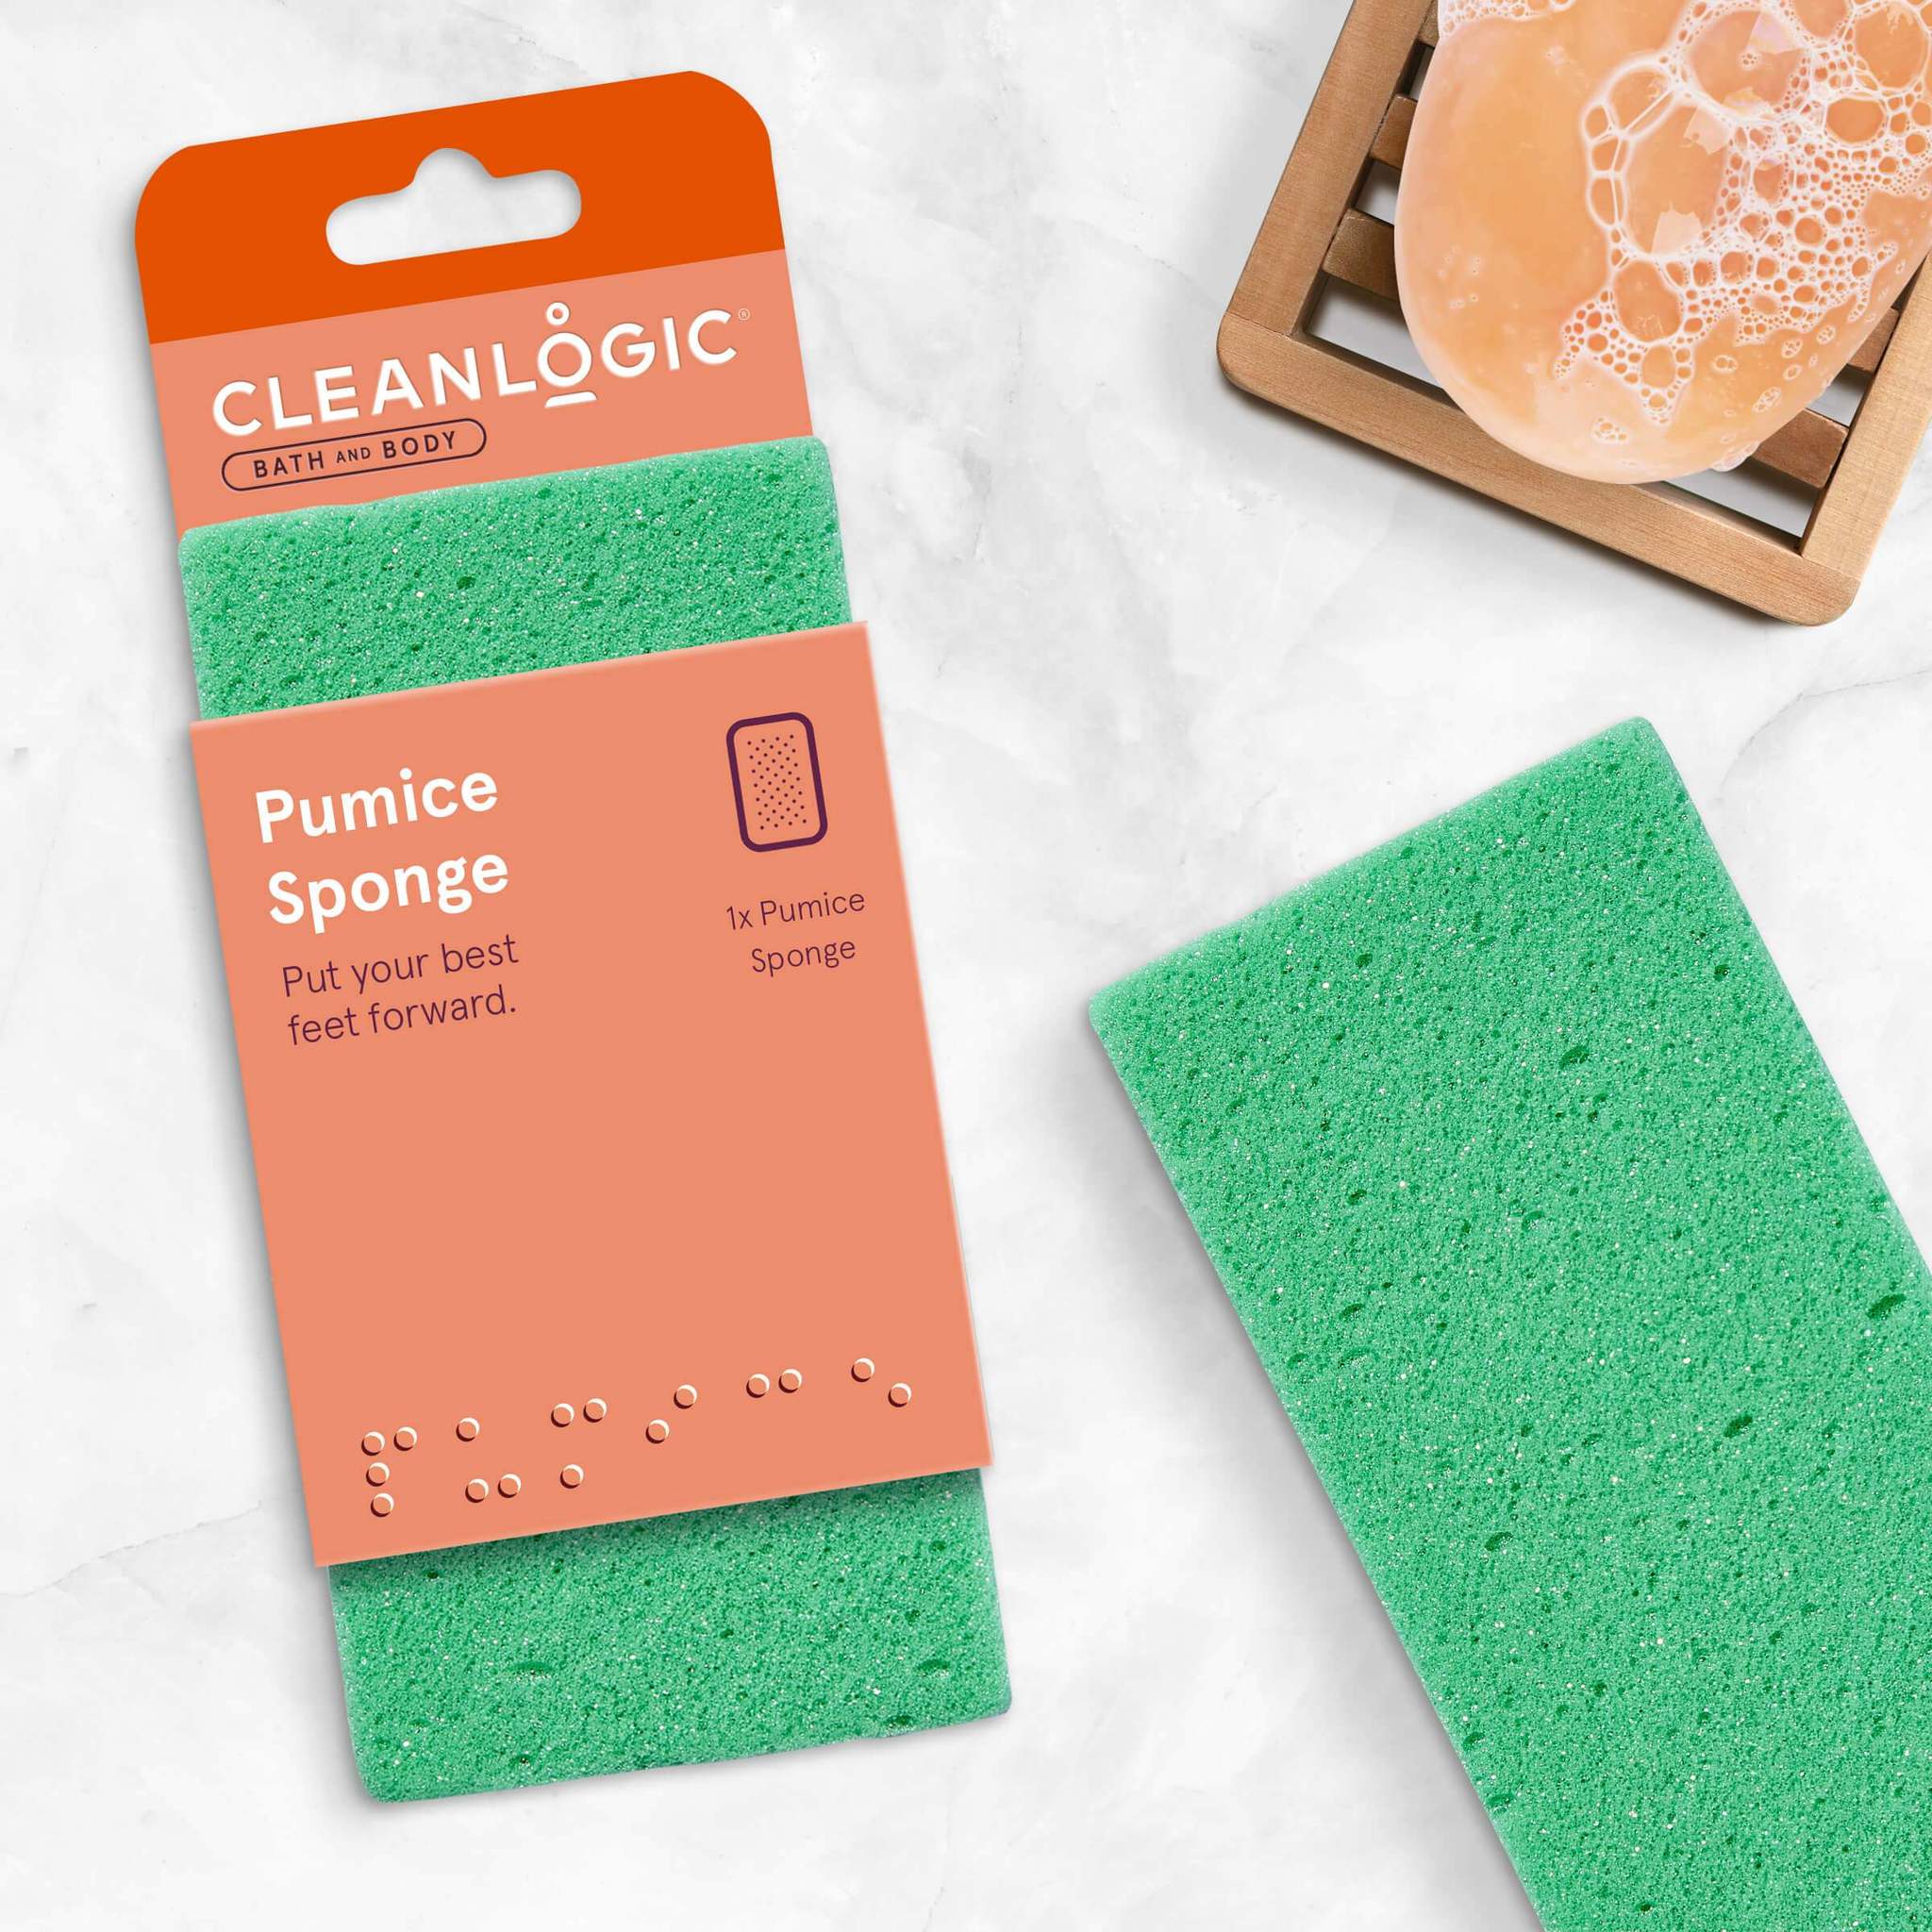 Cleanlogic Bath & Body Pumice Sponge